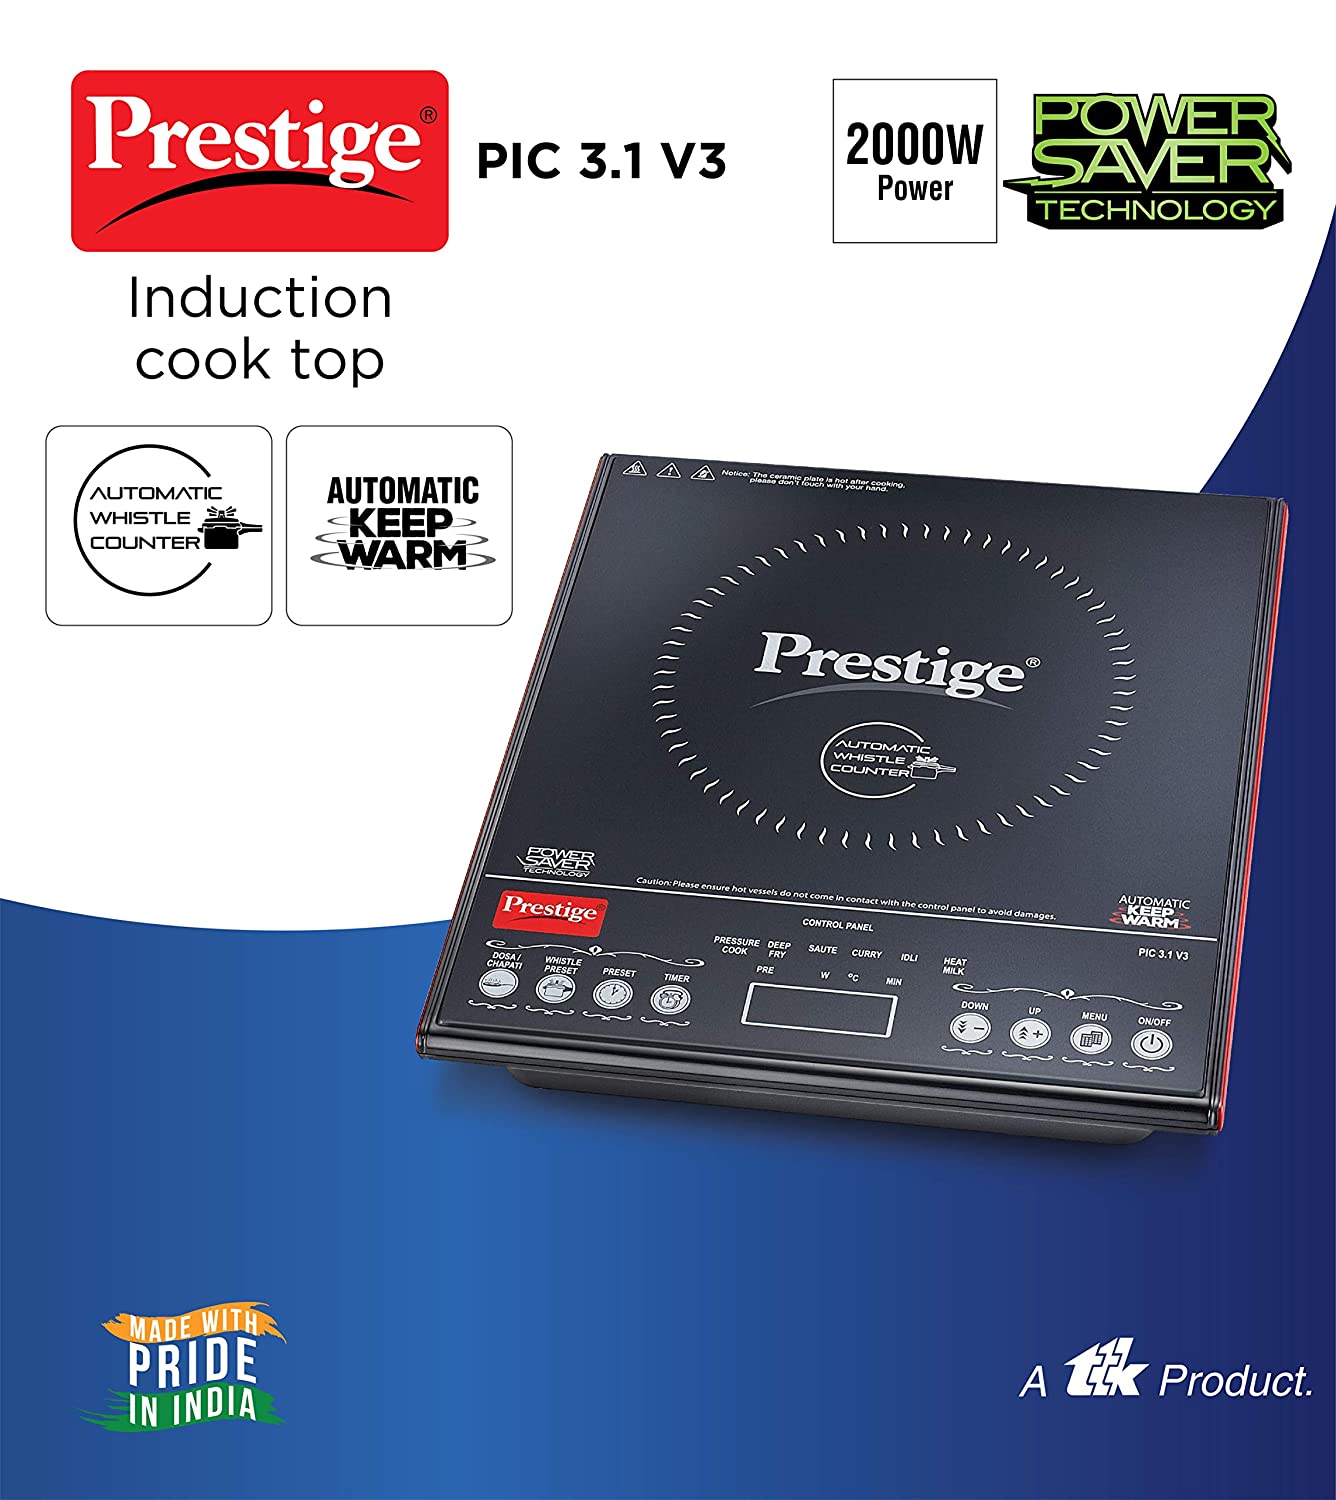 प्रेस्टीज PIC 3.1 V3 2000-वॅट इंडक्शन कूकटॉप टच पॅनेलसह